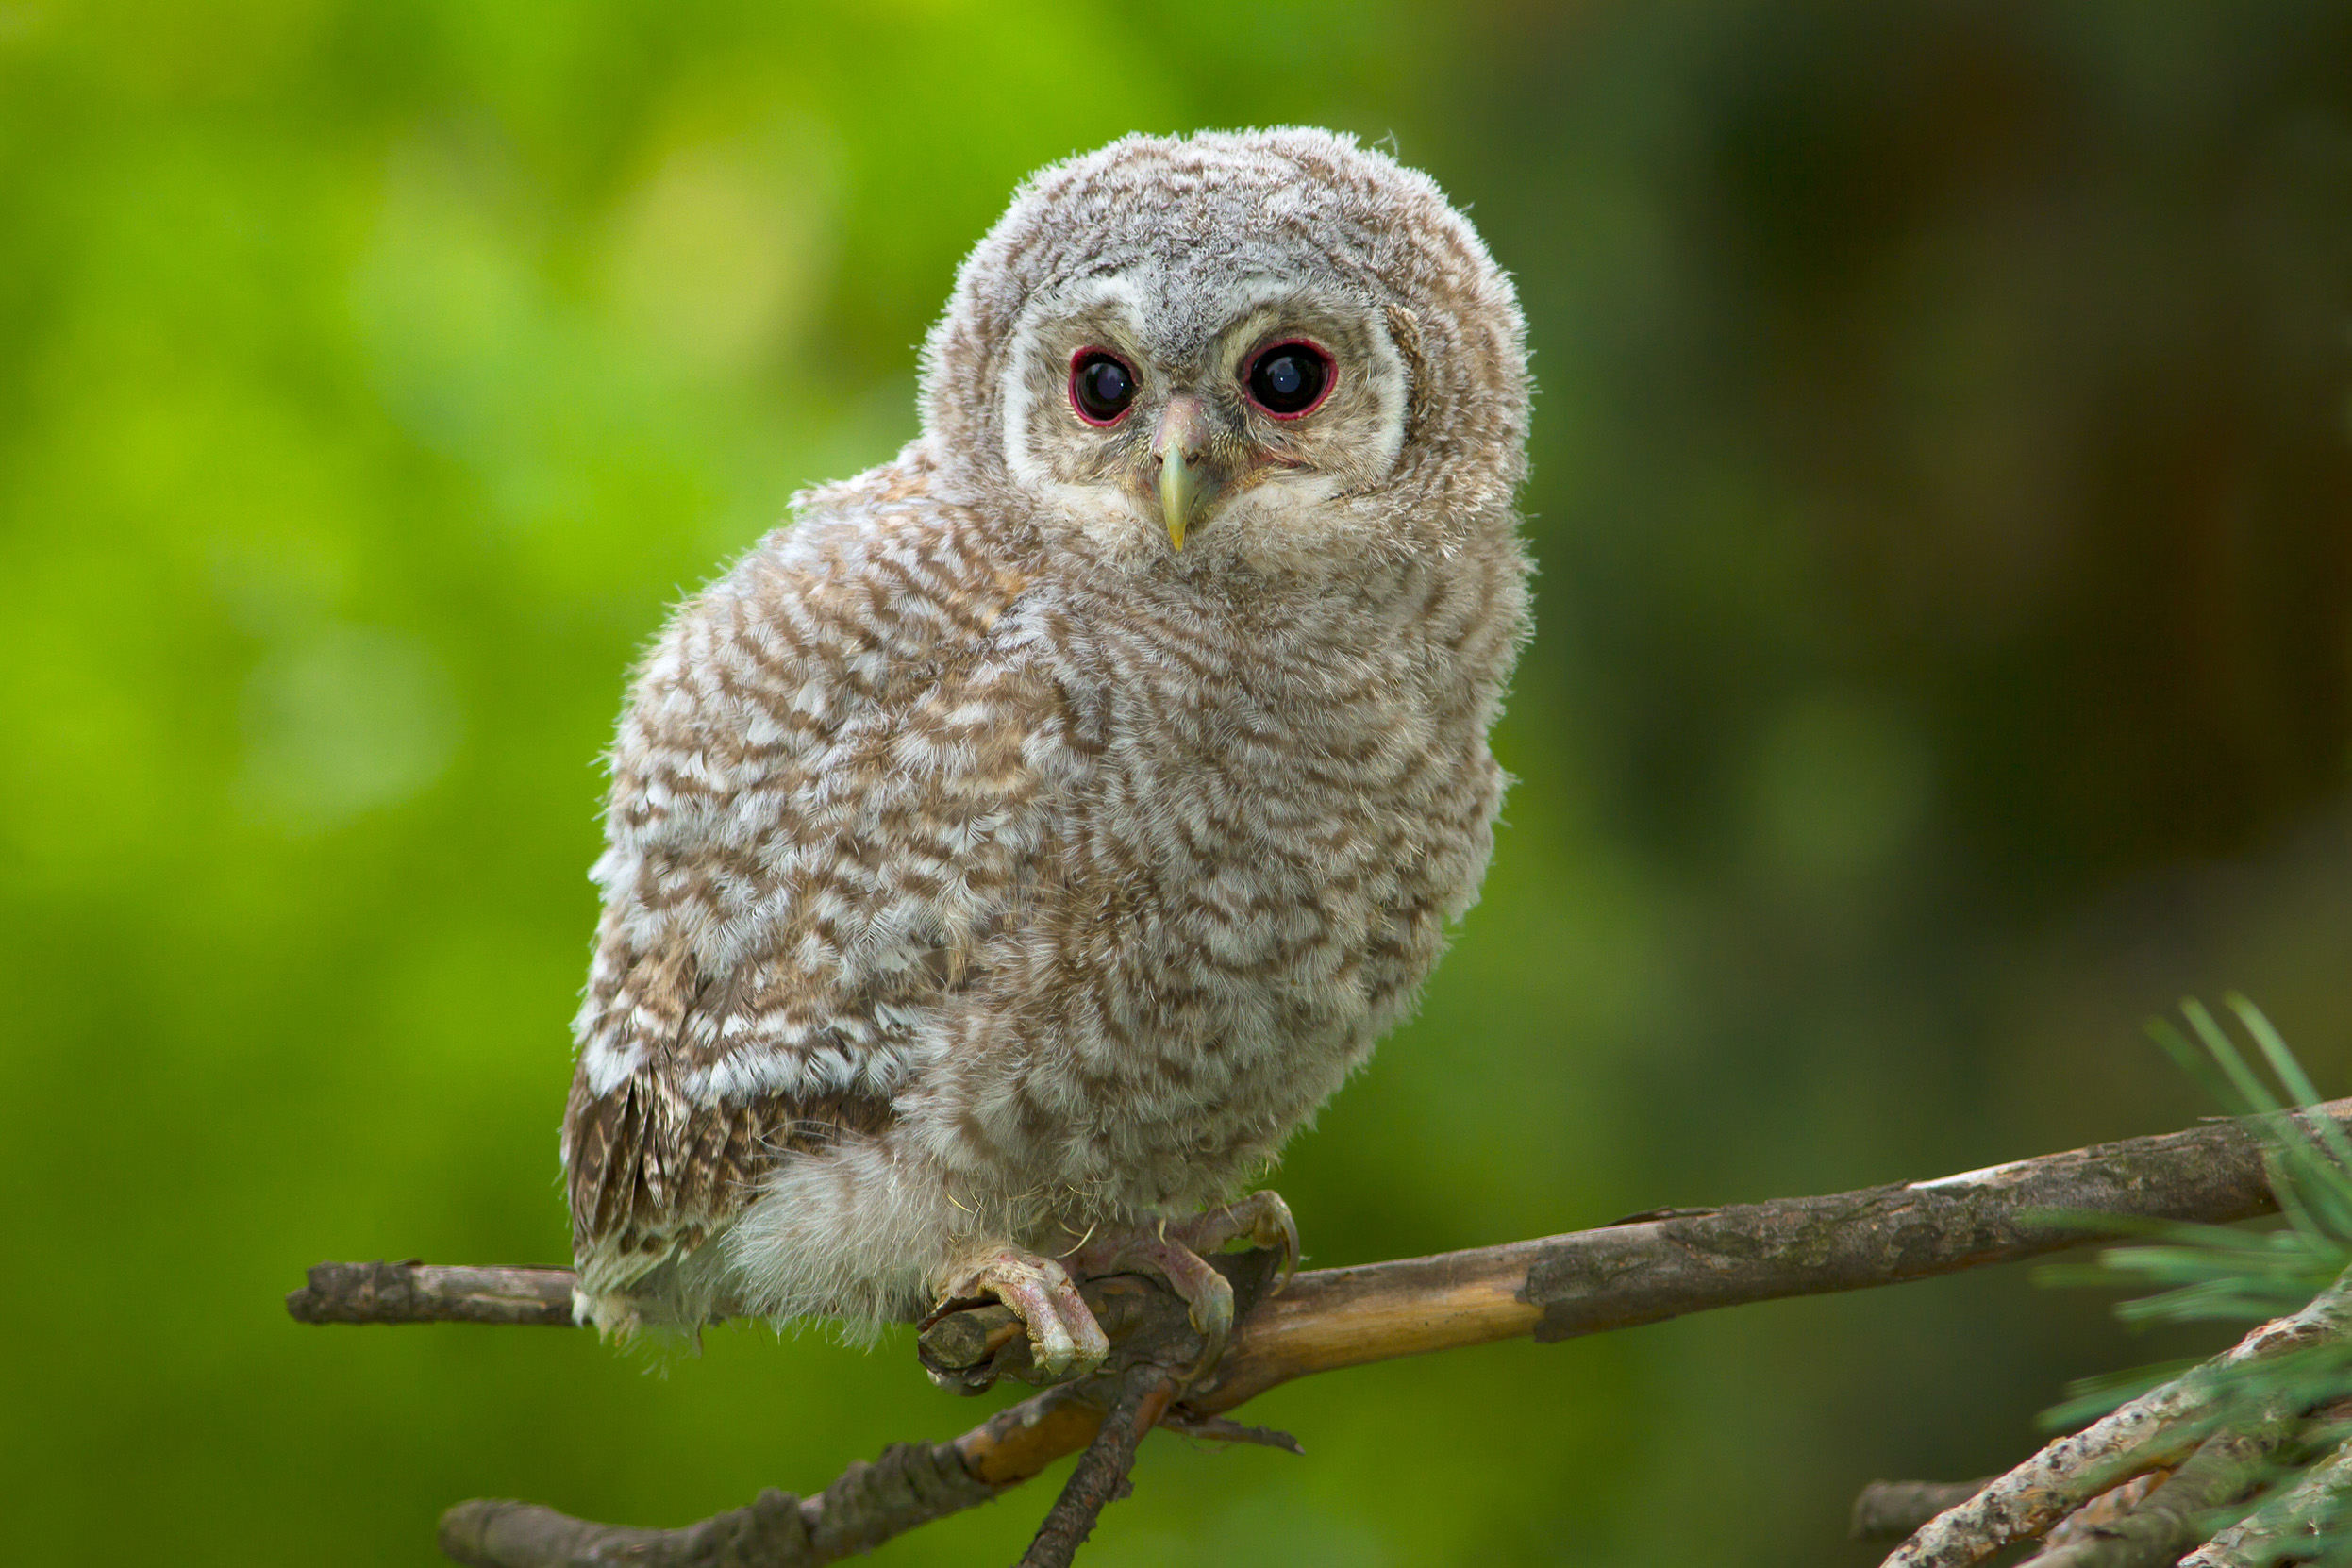 Juvenile Tawny Owl sat on a branch.